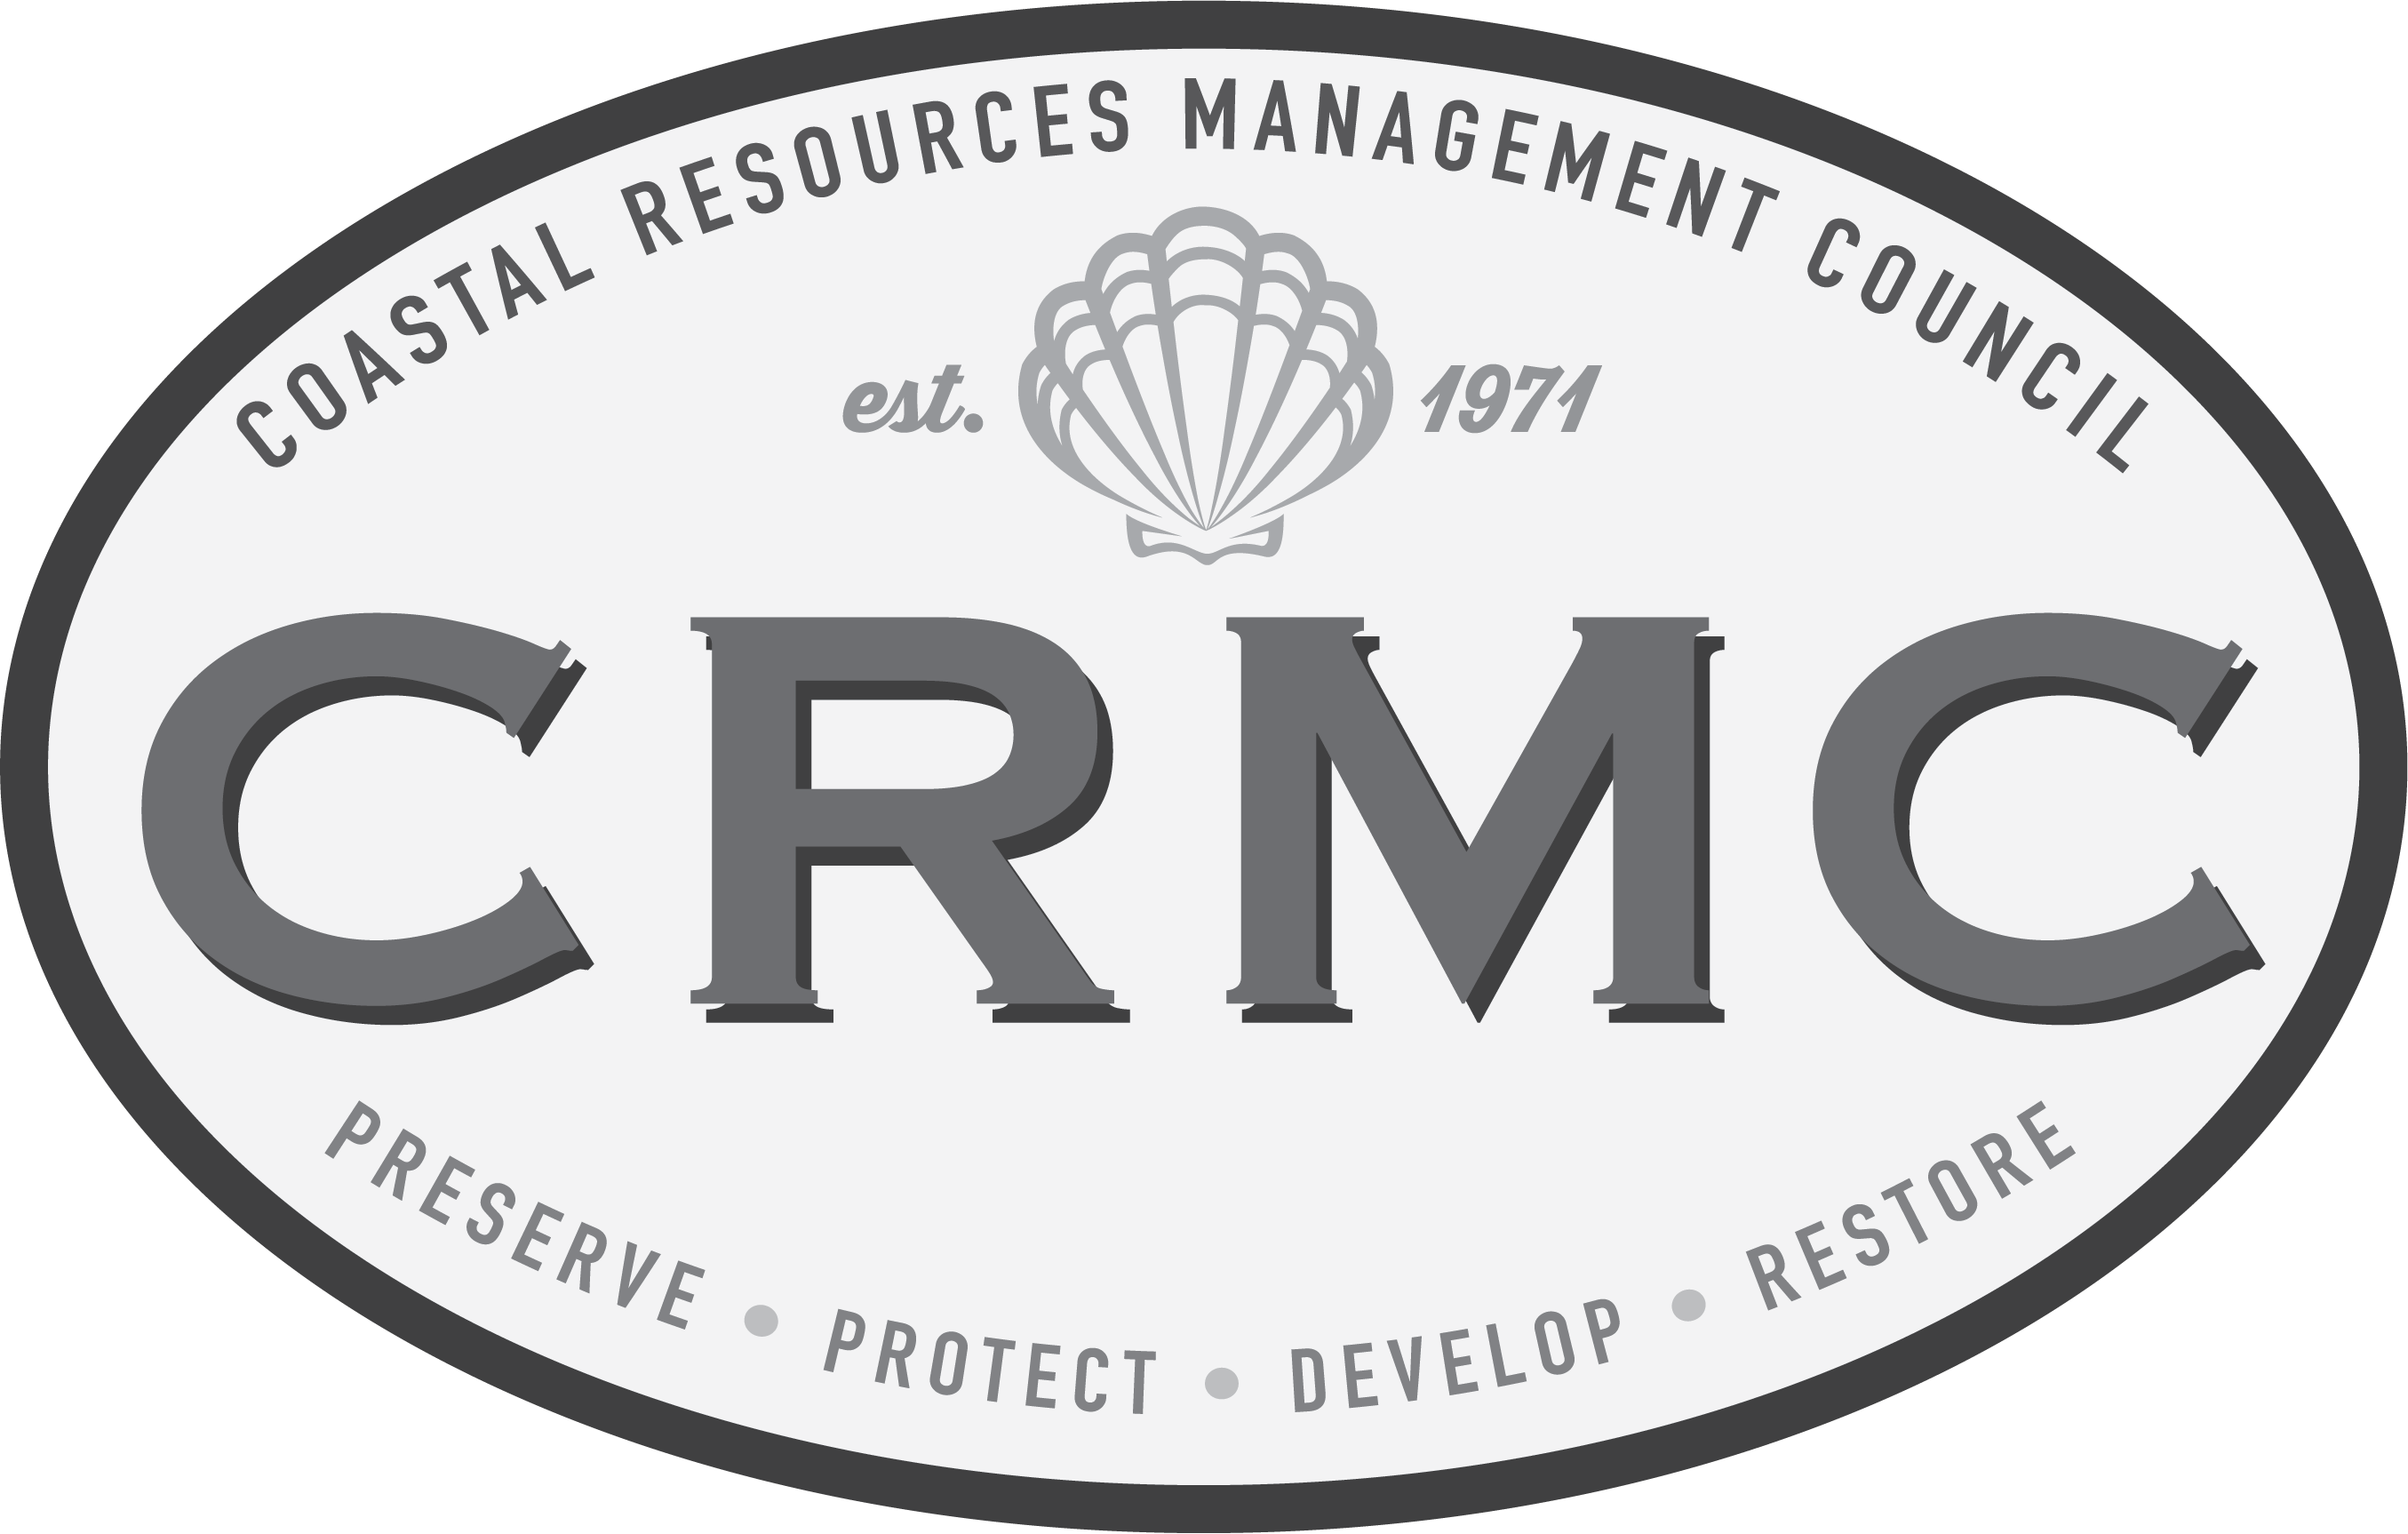 CRMC logo black and white